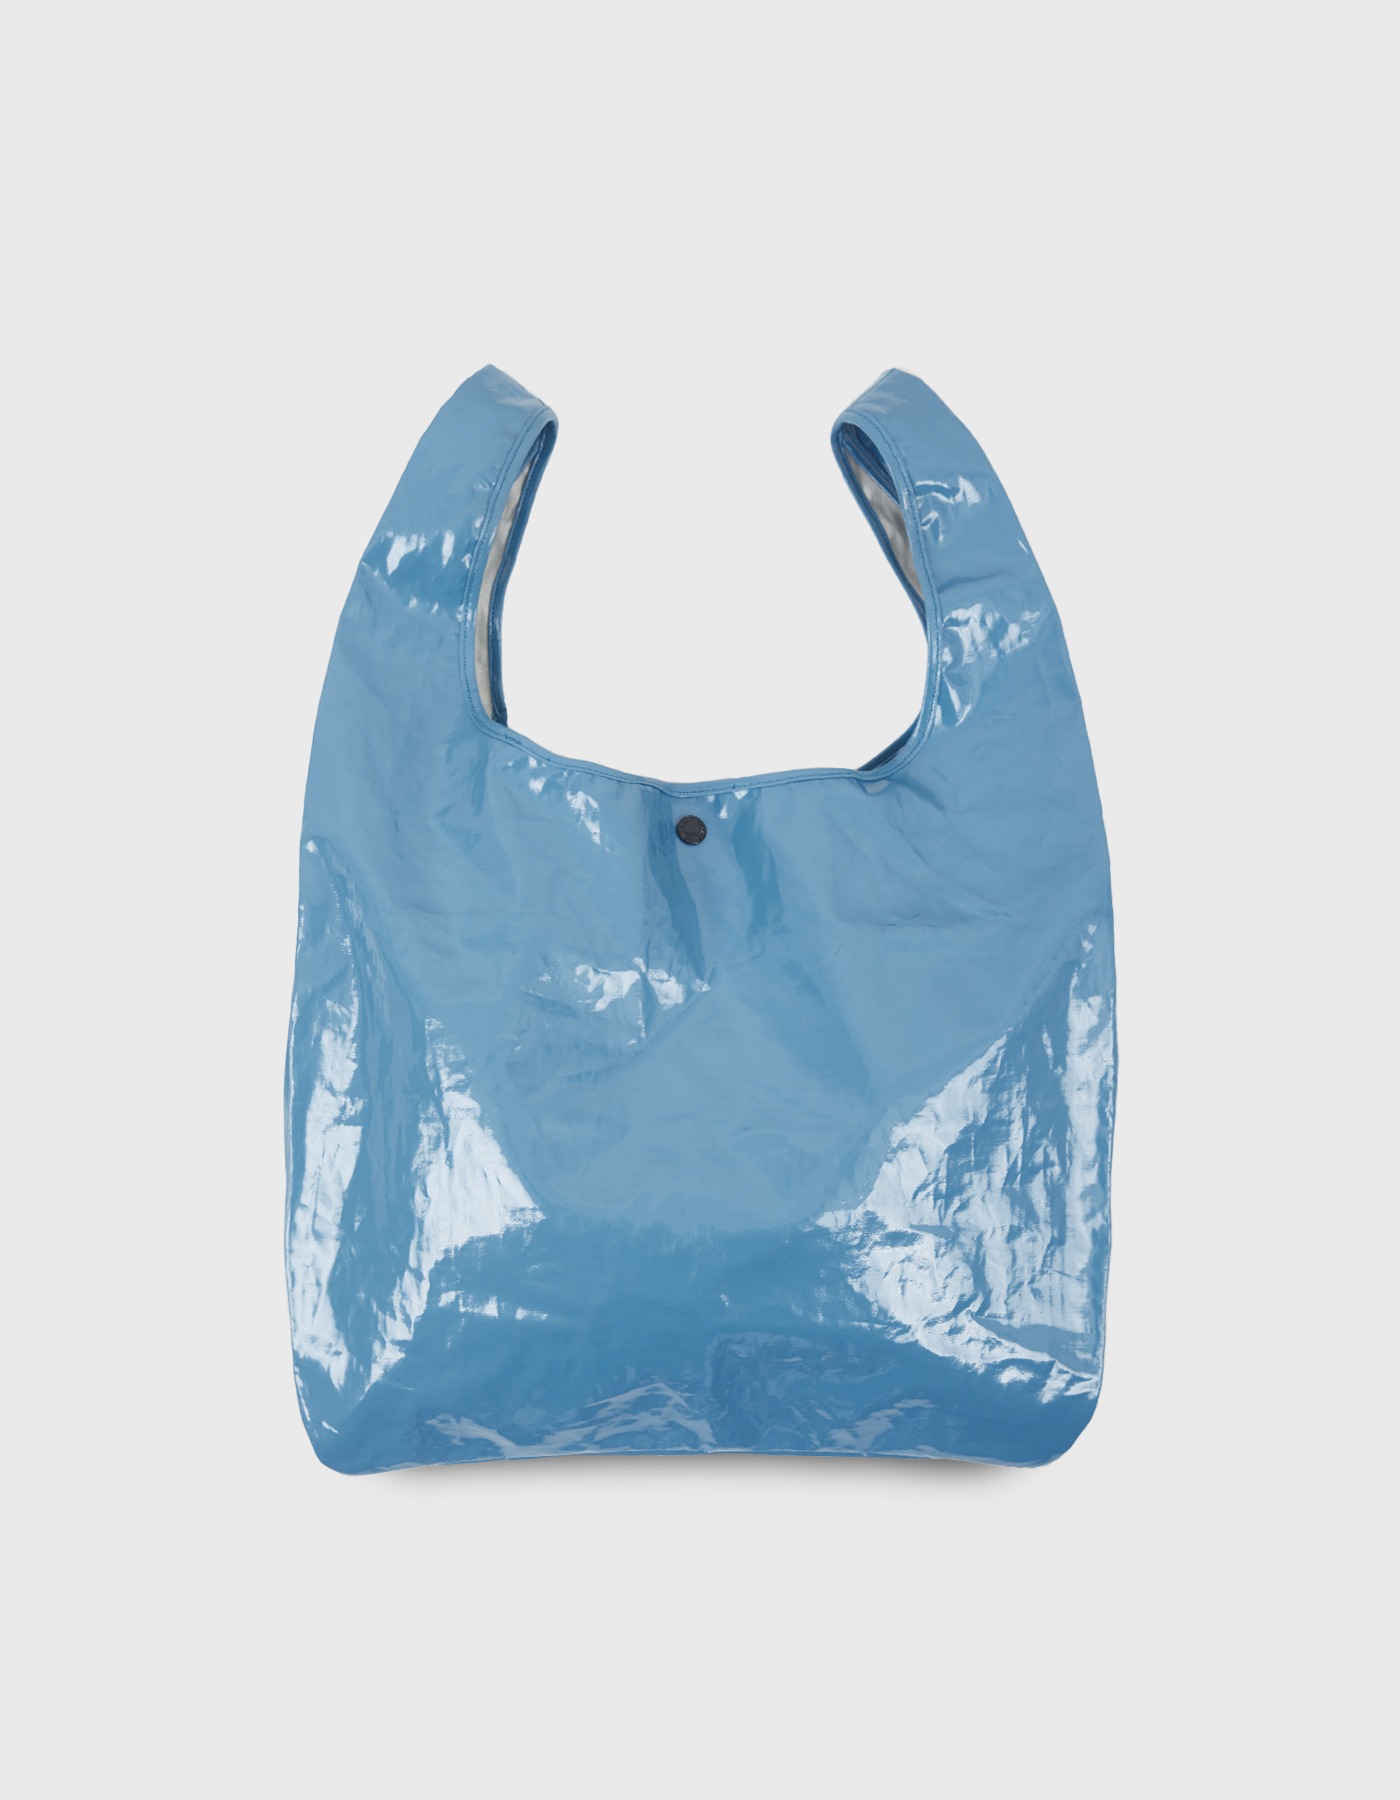 PATENT PLASTIC BAG / Sky Blue